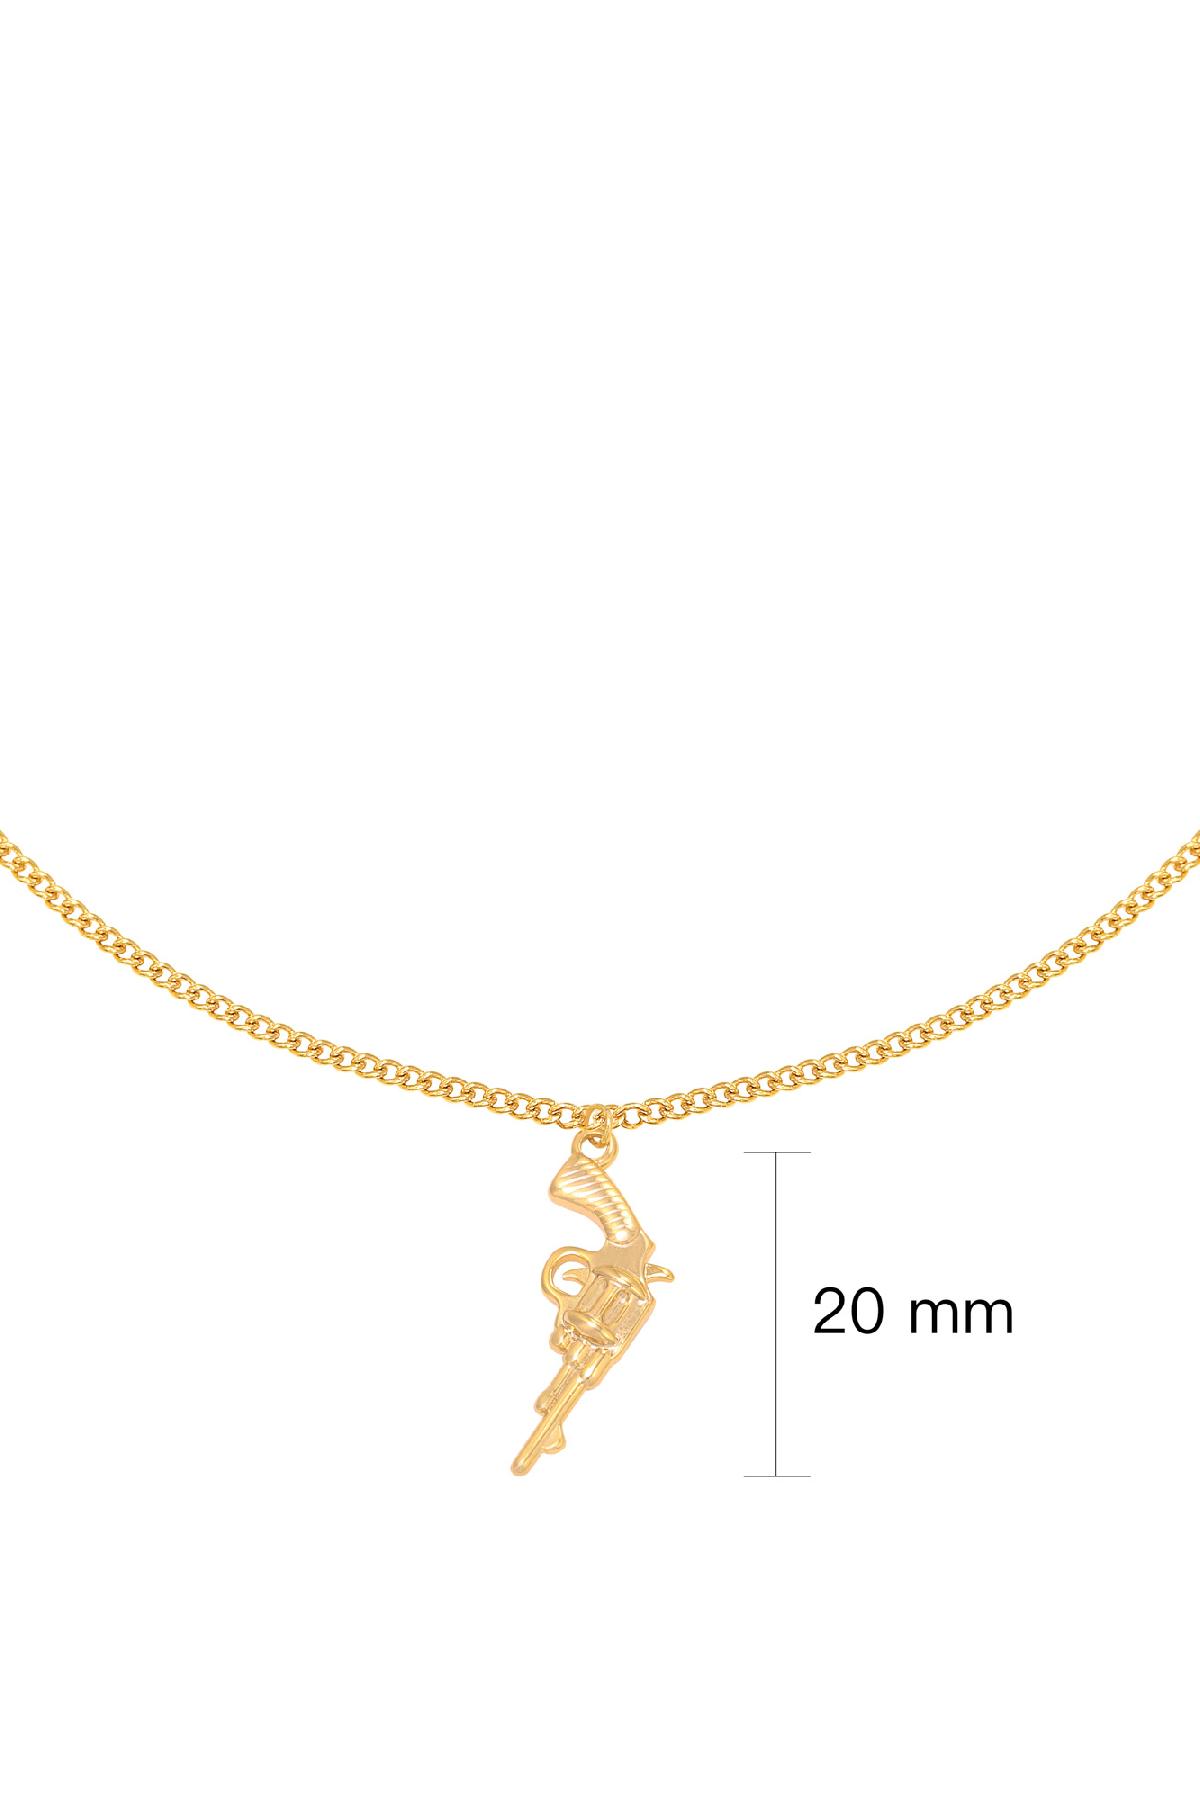 Necklace Gun Gold Copper h5 Picture2